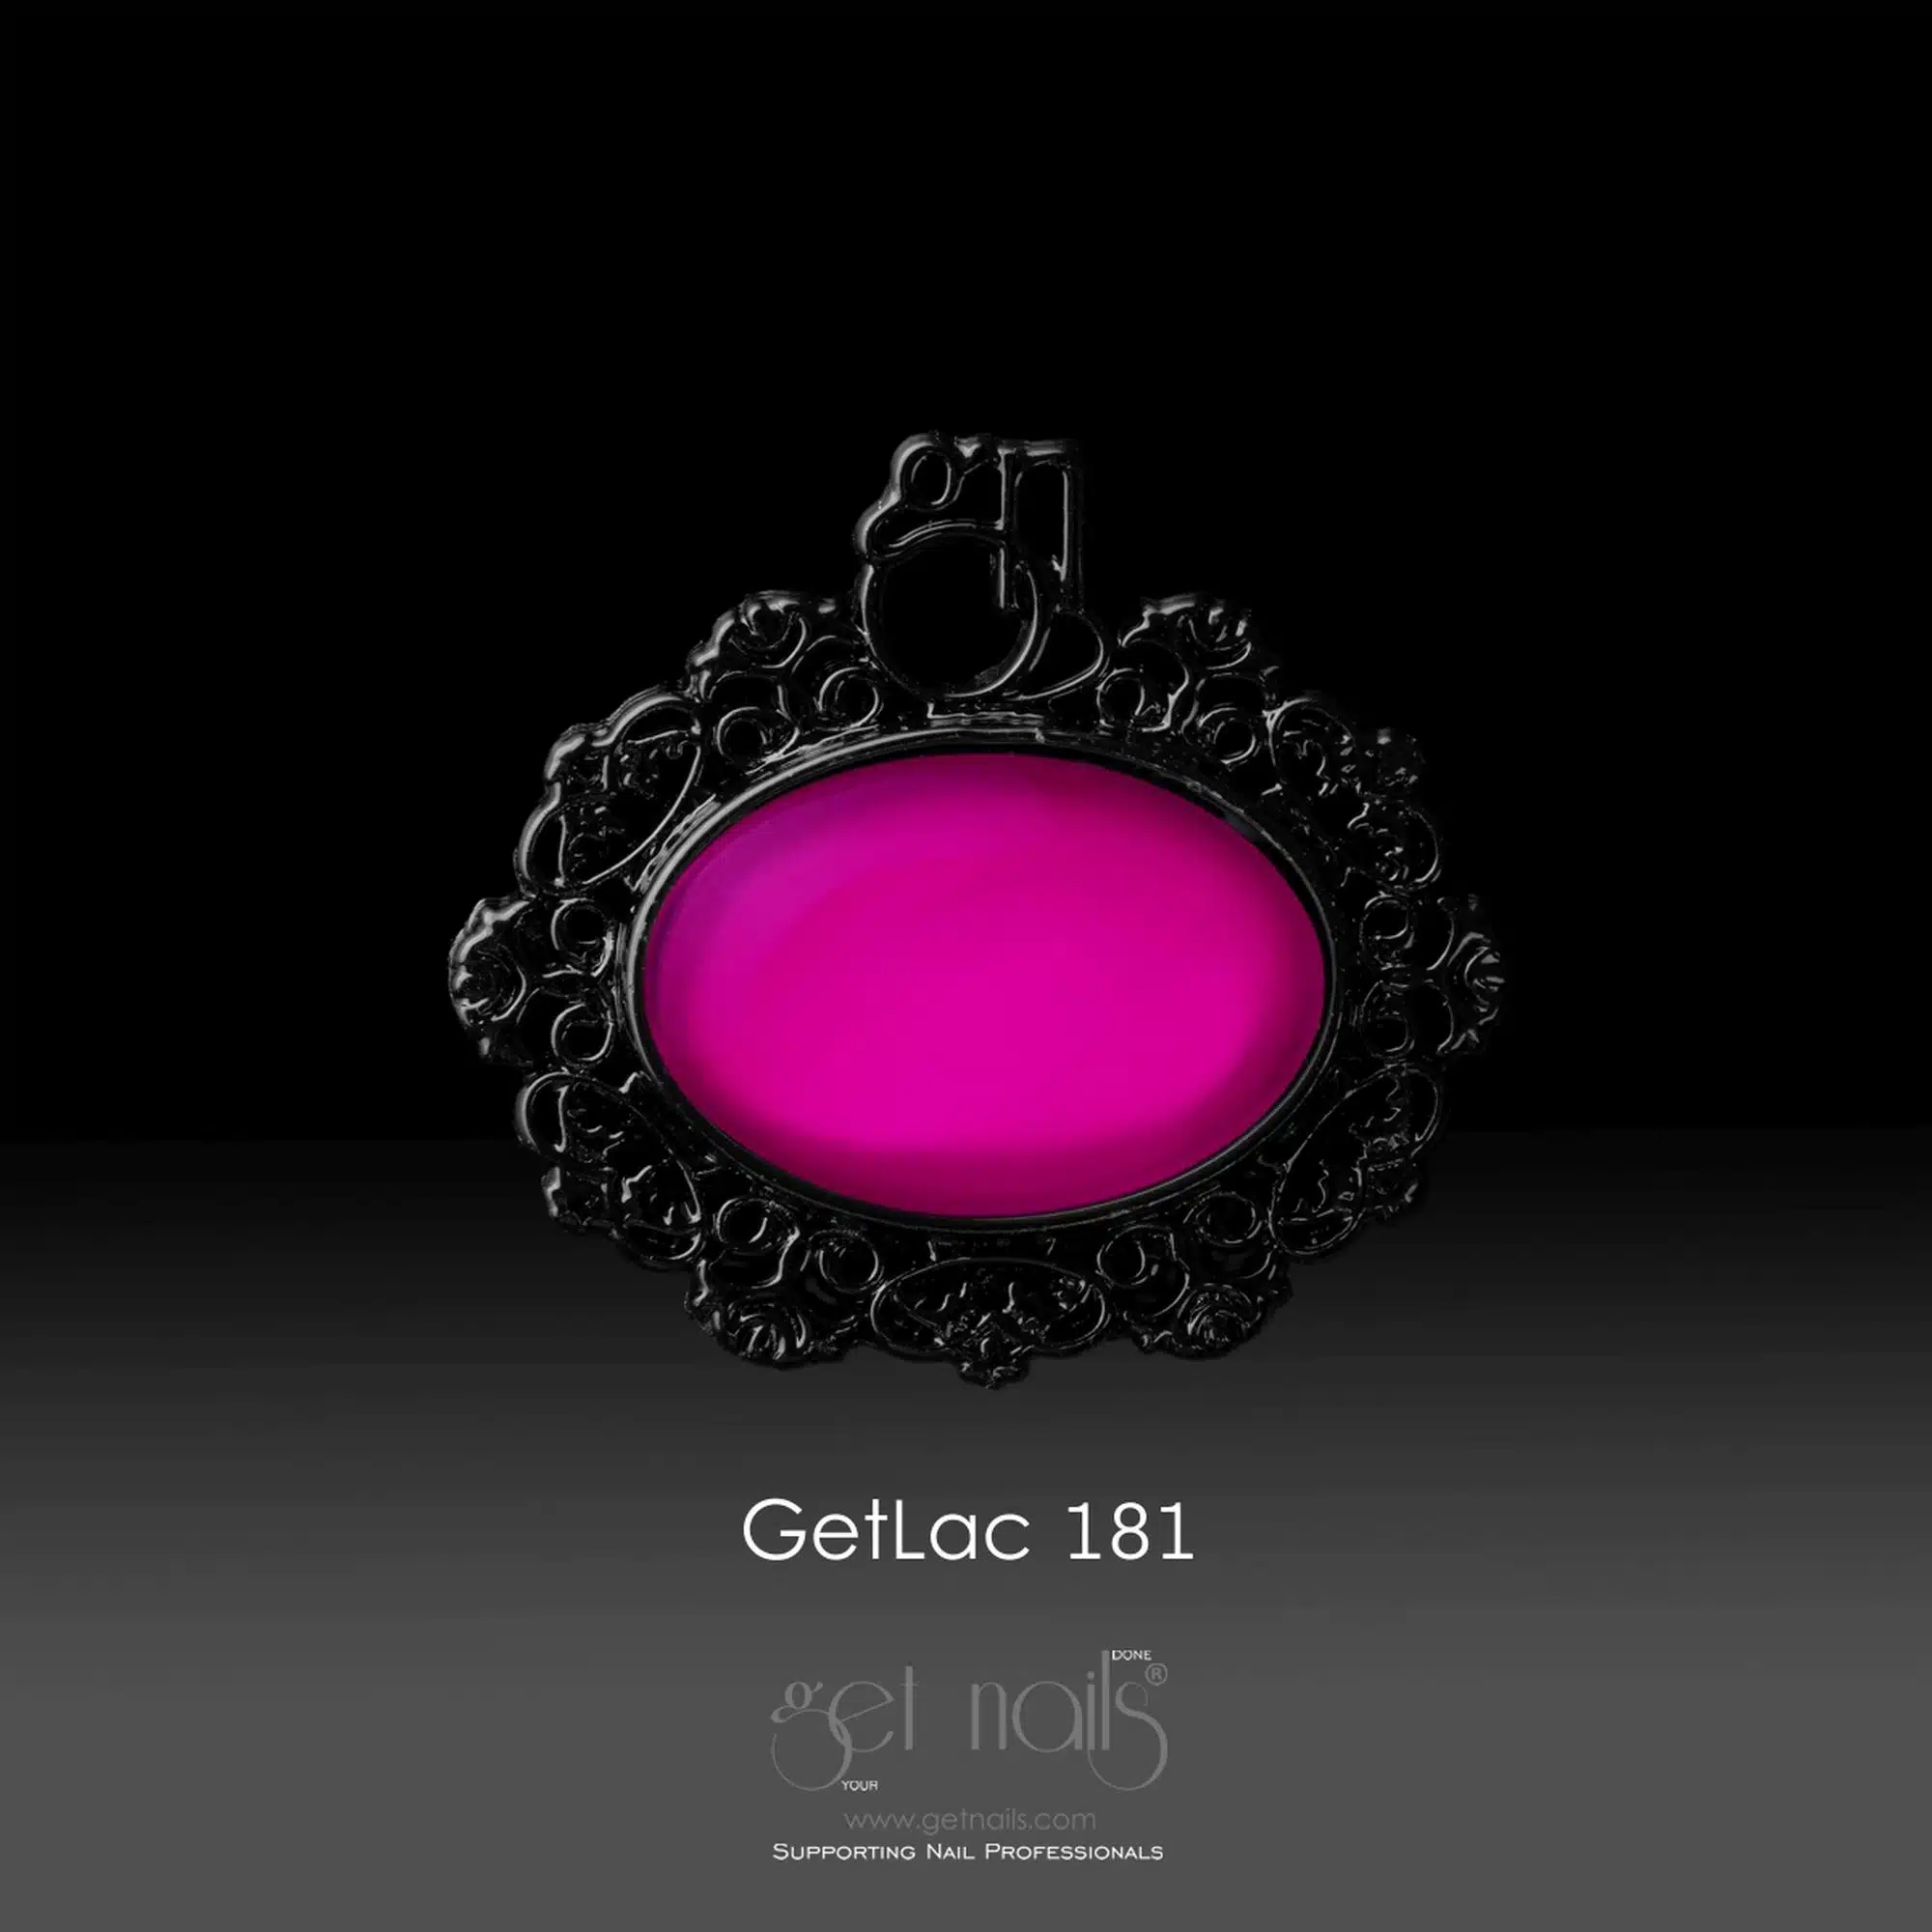 Get Nails Austria - GetLac 181 15g